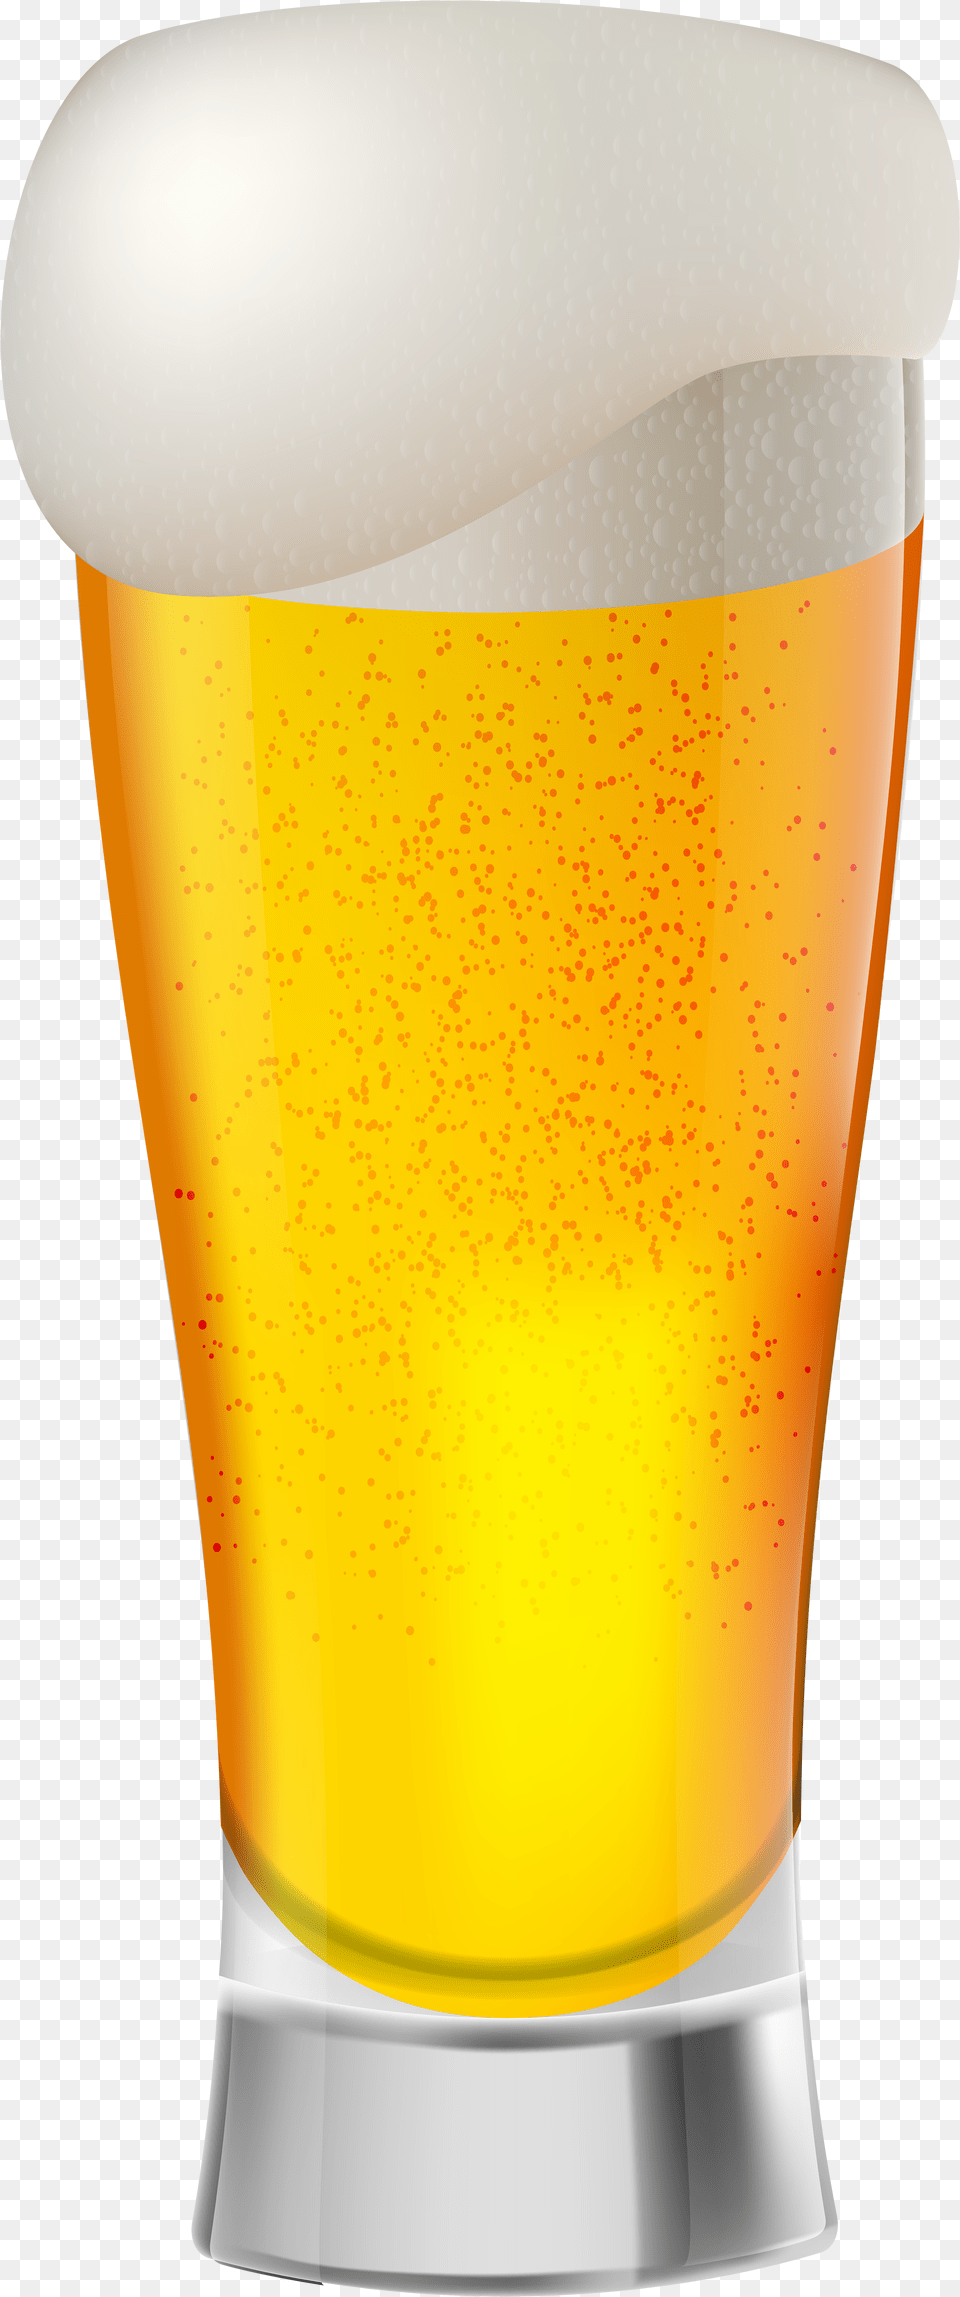 Beer Clip Art Transparent Background Beer Glass Clipart, Alcohol, Beer Glass, Beverage, Liquor Png